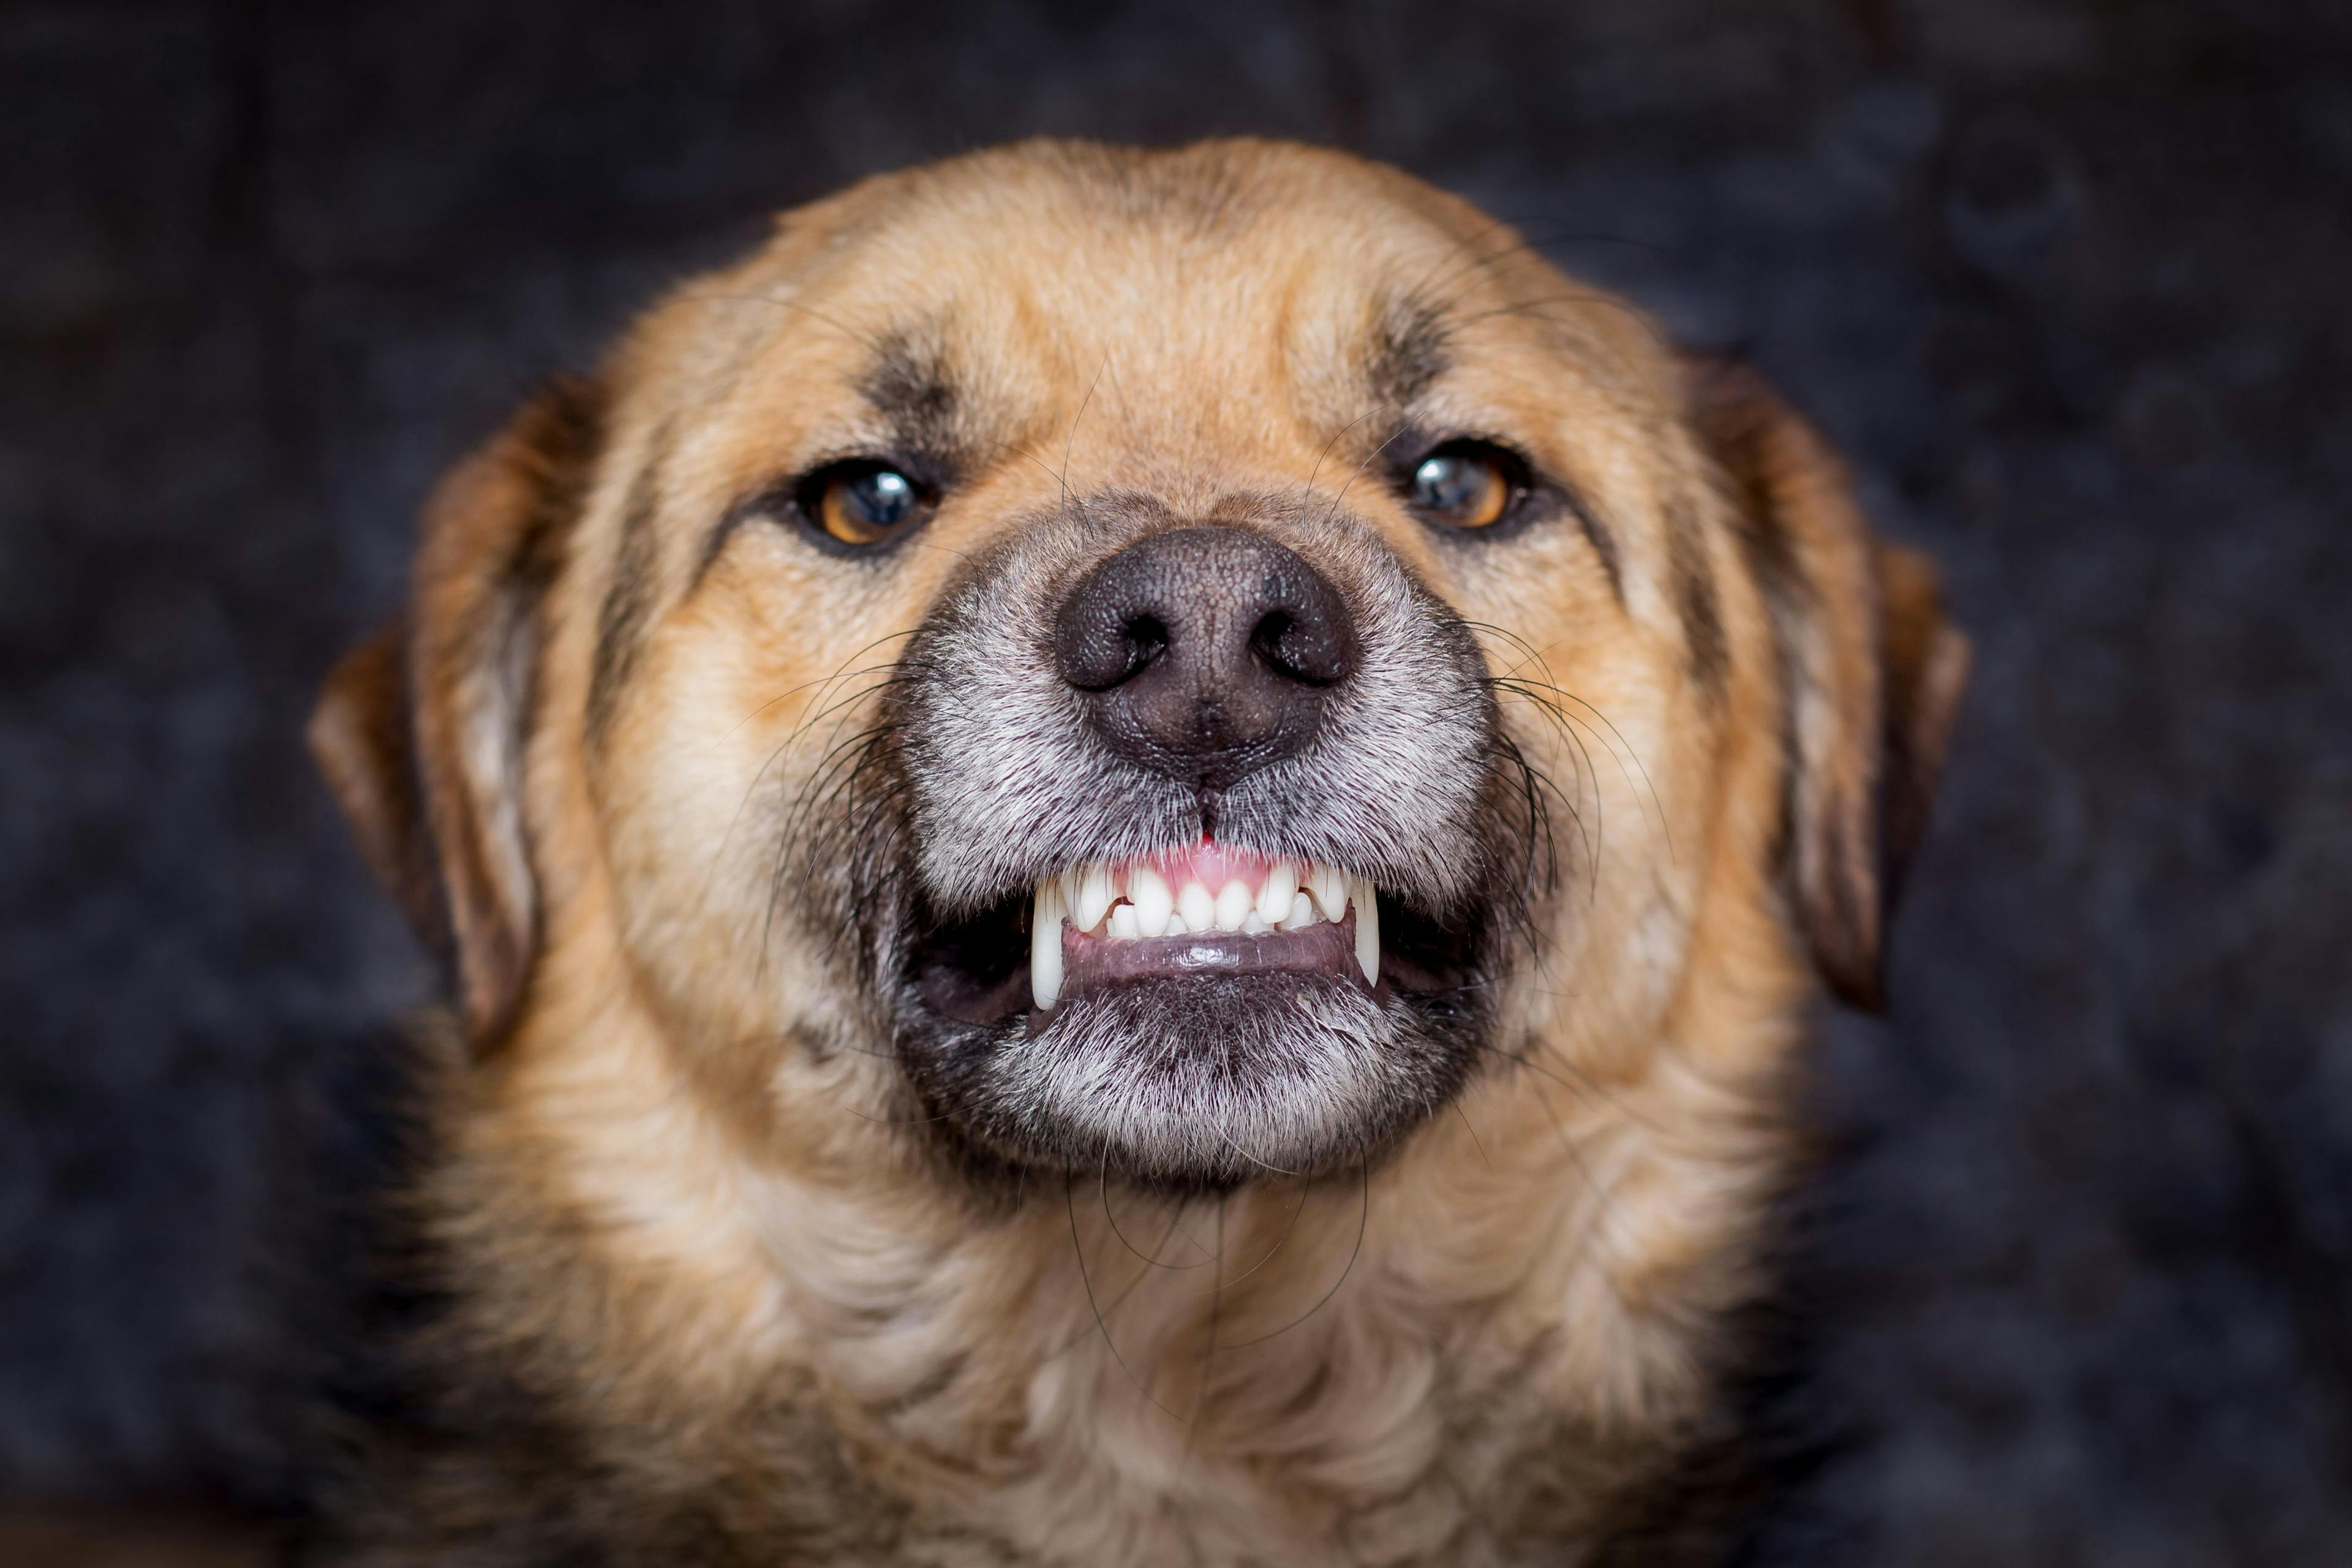 Veterinary experts offer tips and tricks for preventing dog bites 